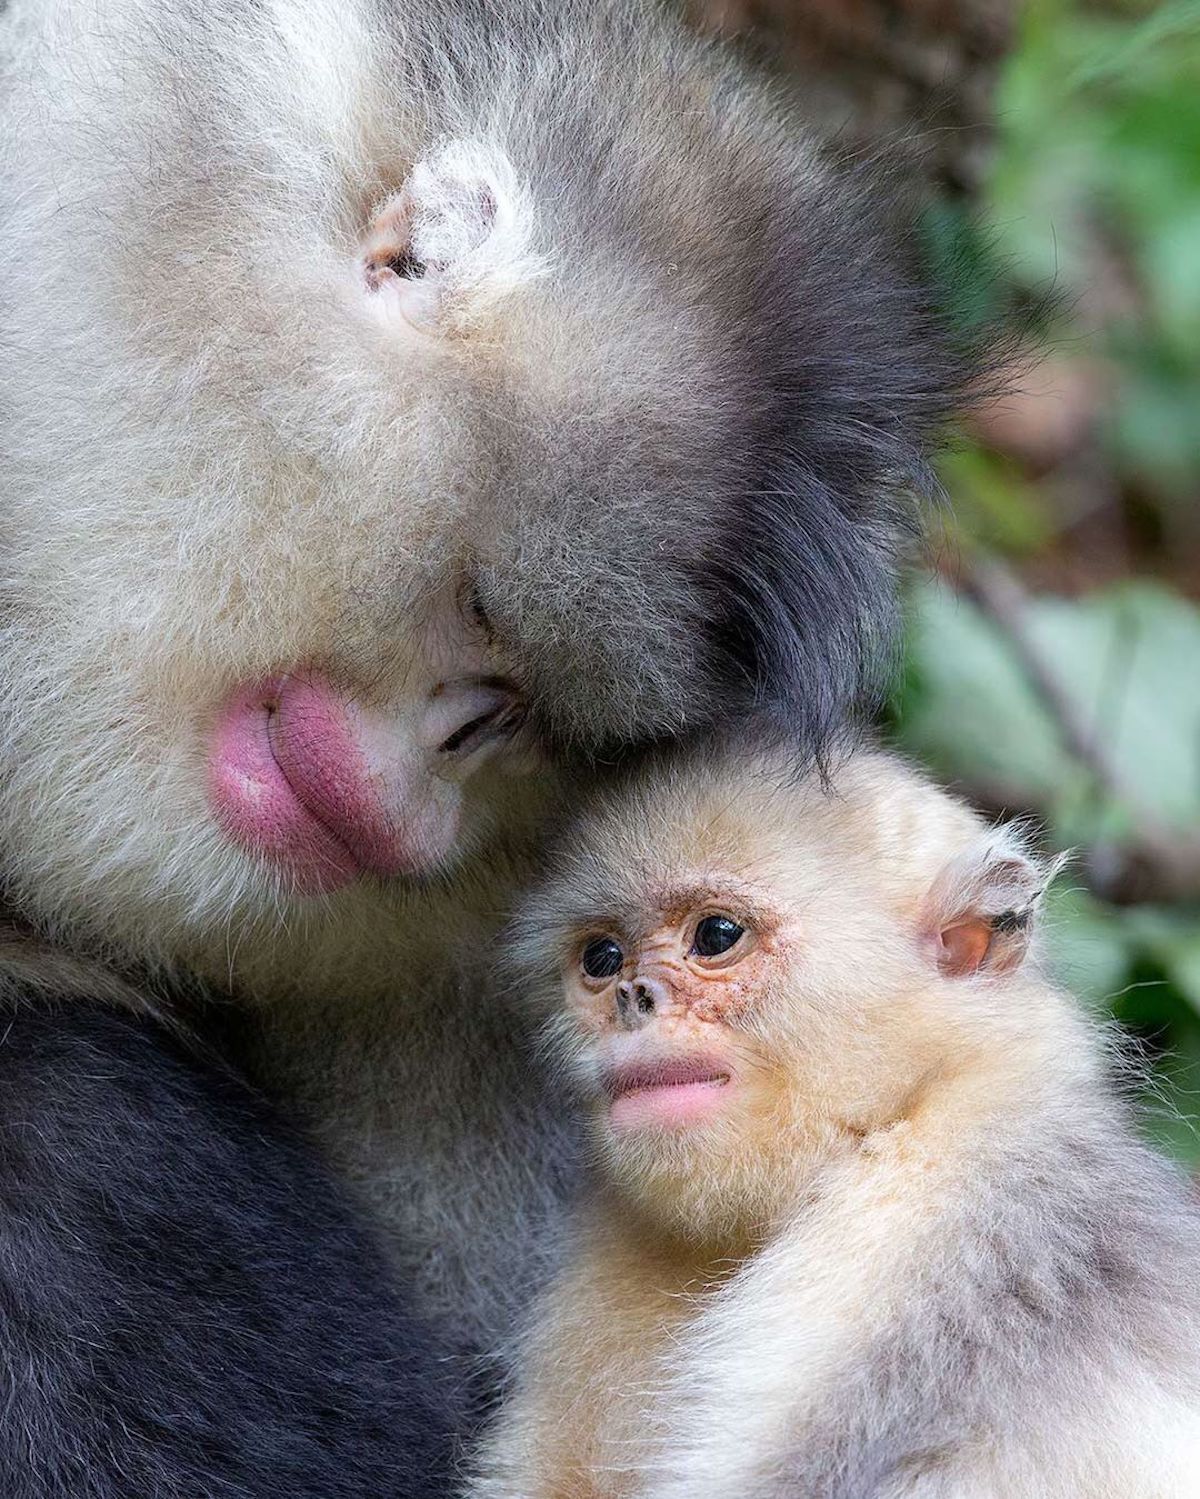 Photos of Monkeys by Mogens Trolle